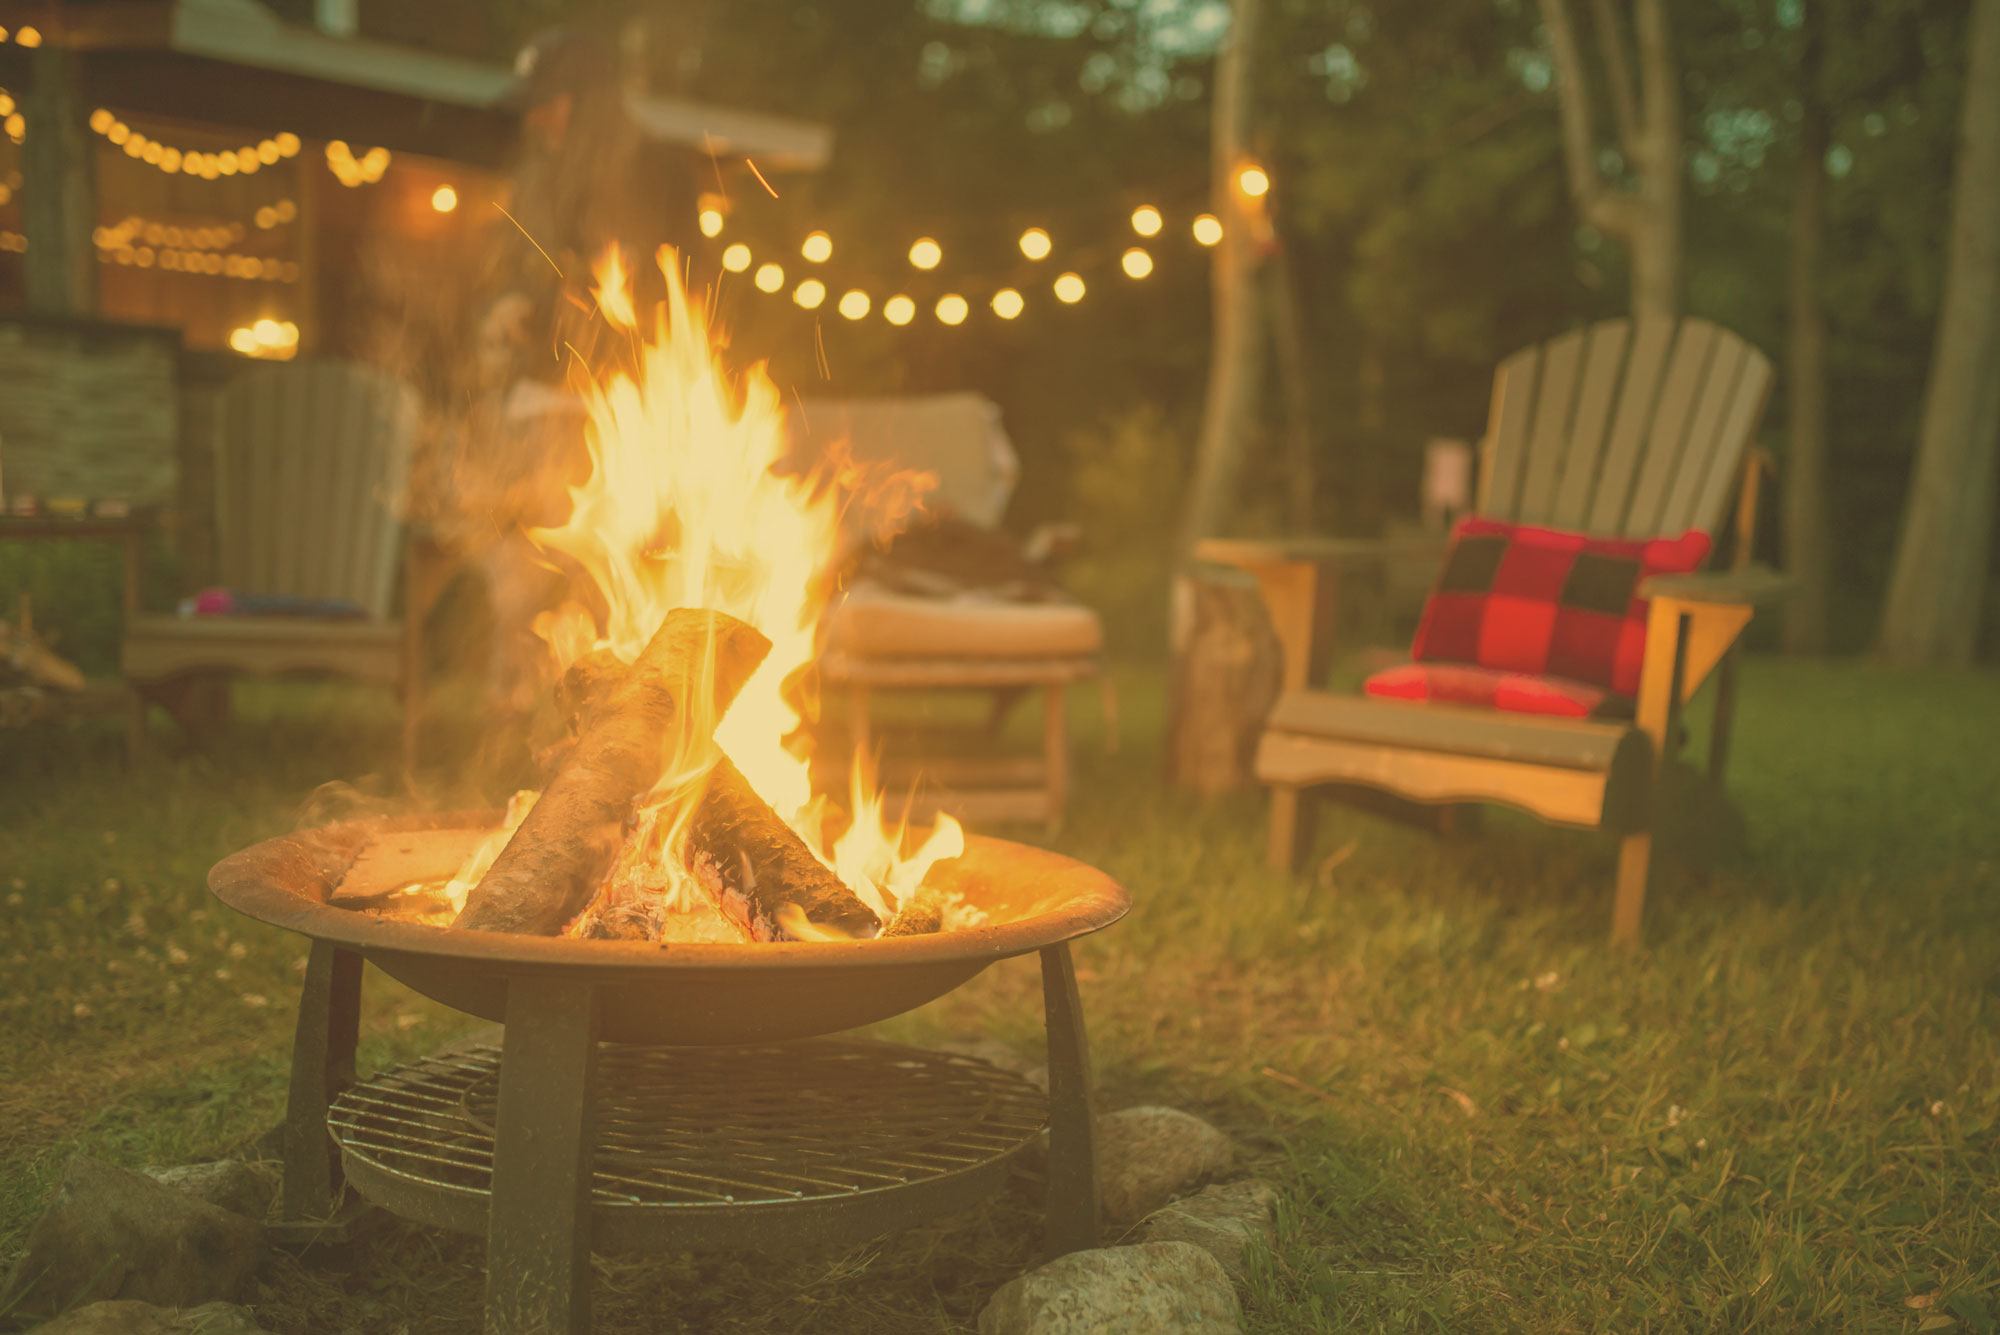 Chairs around a lit campfire